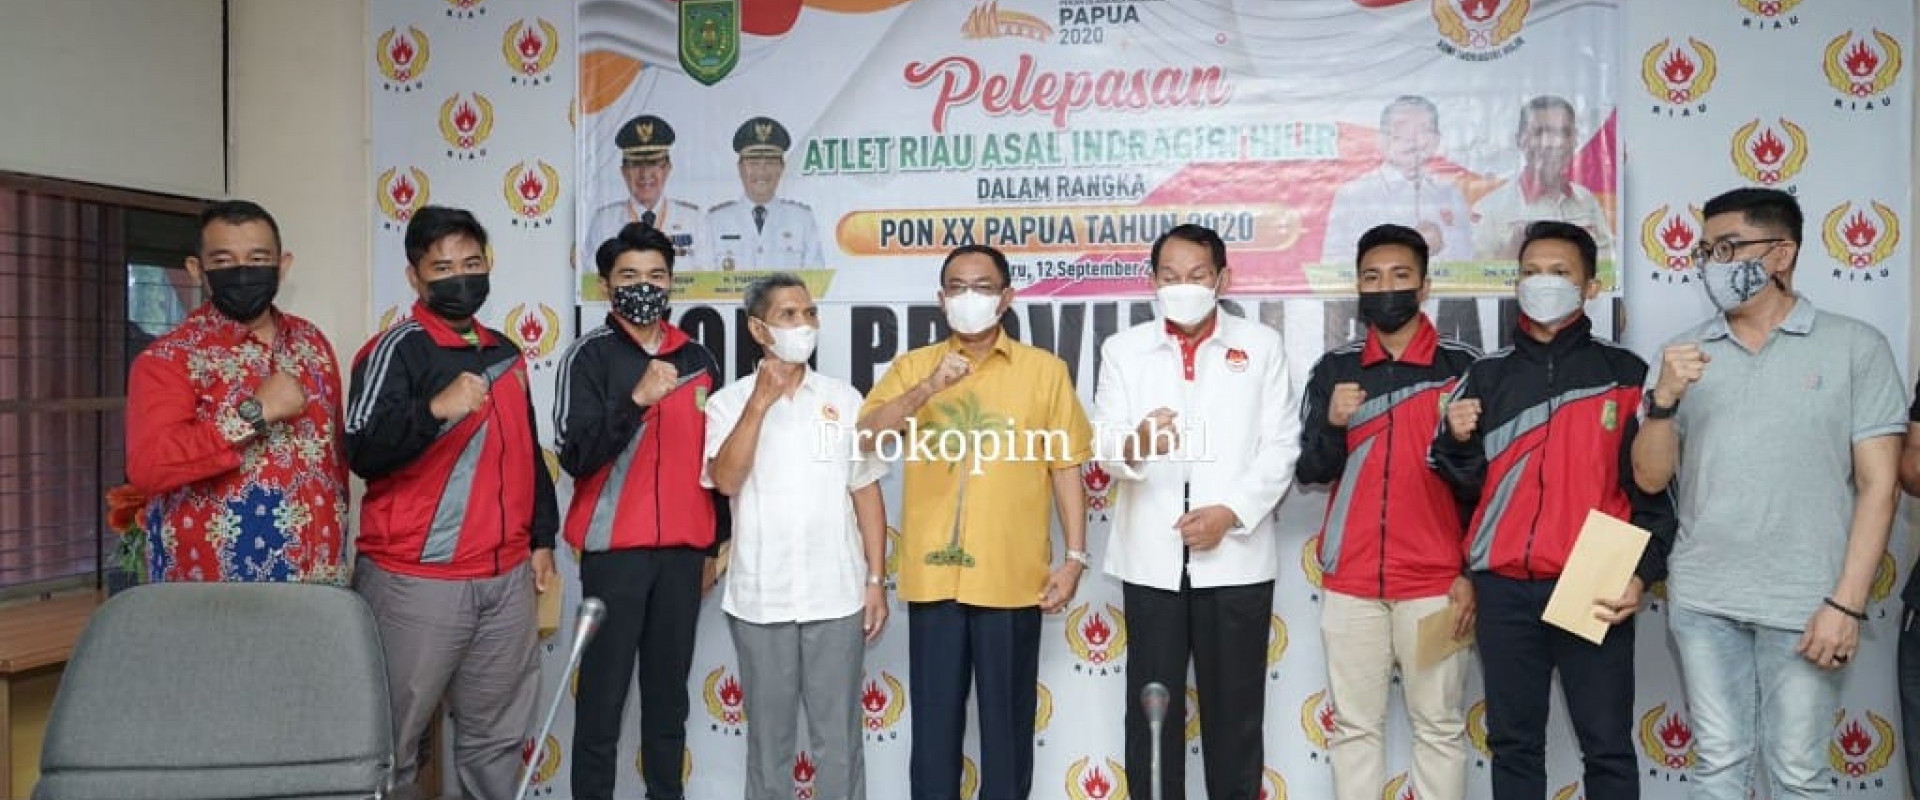 Bupati HM.Wardan Lepas Atlet Provinsi Riau Asal Inhil